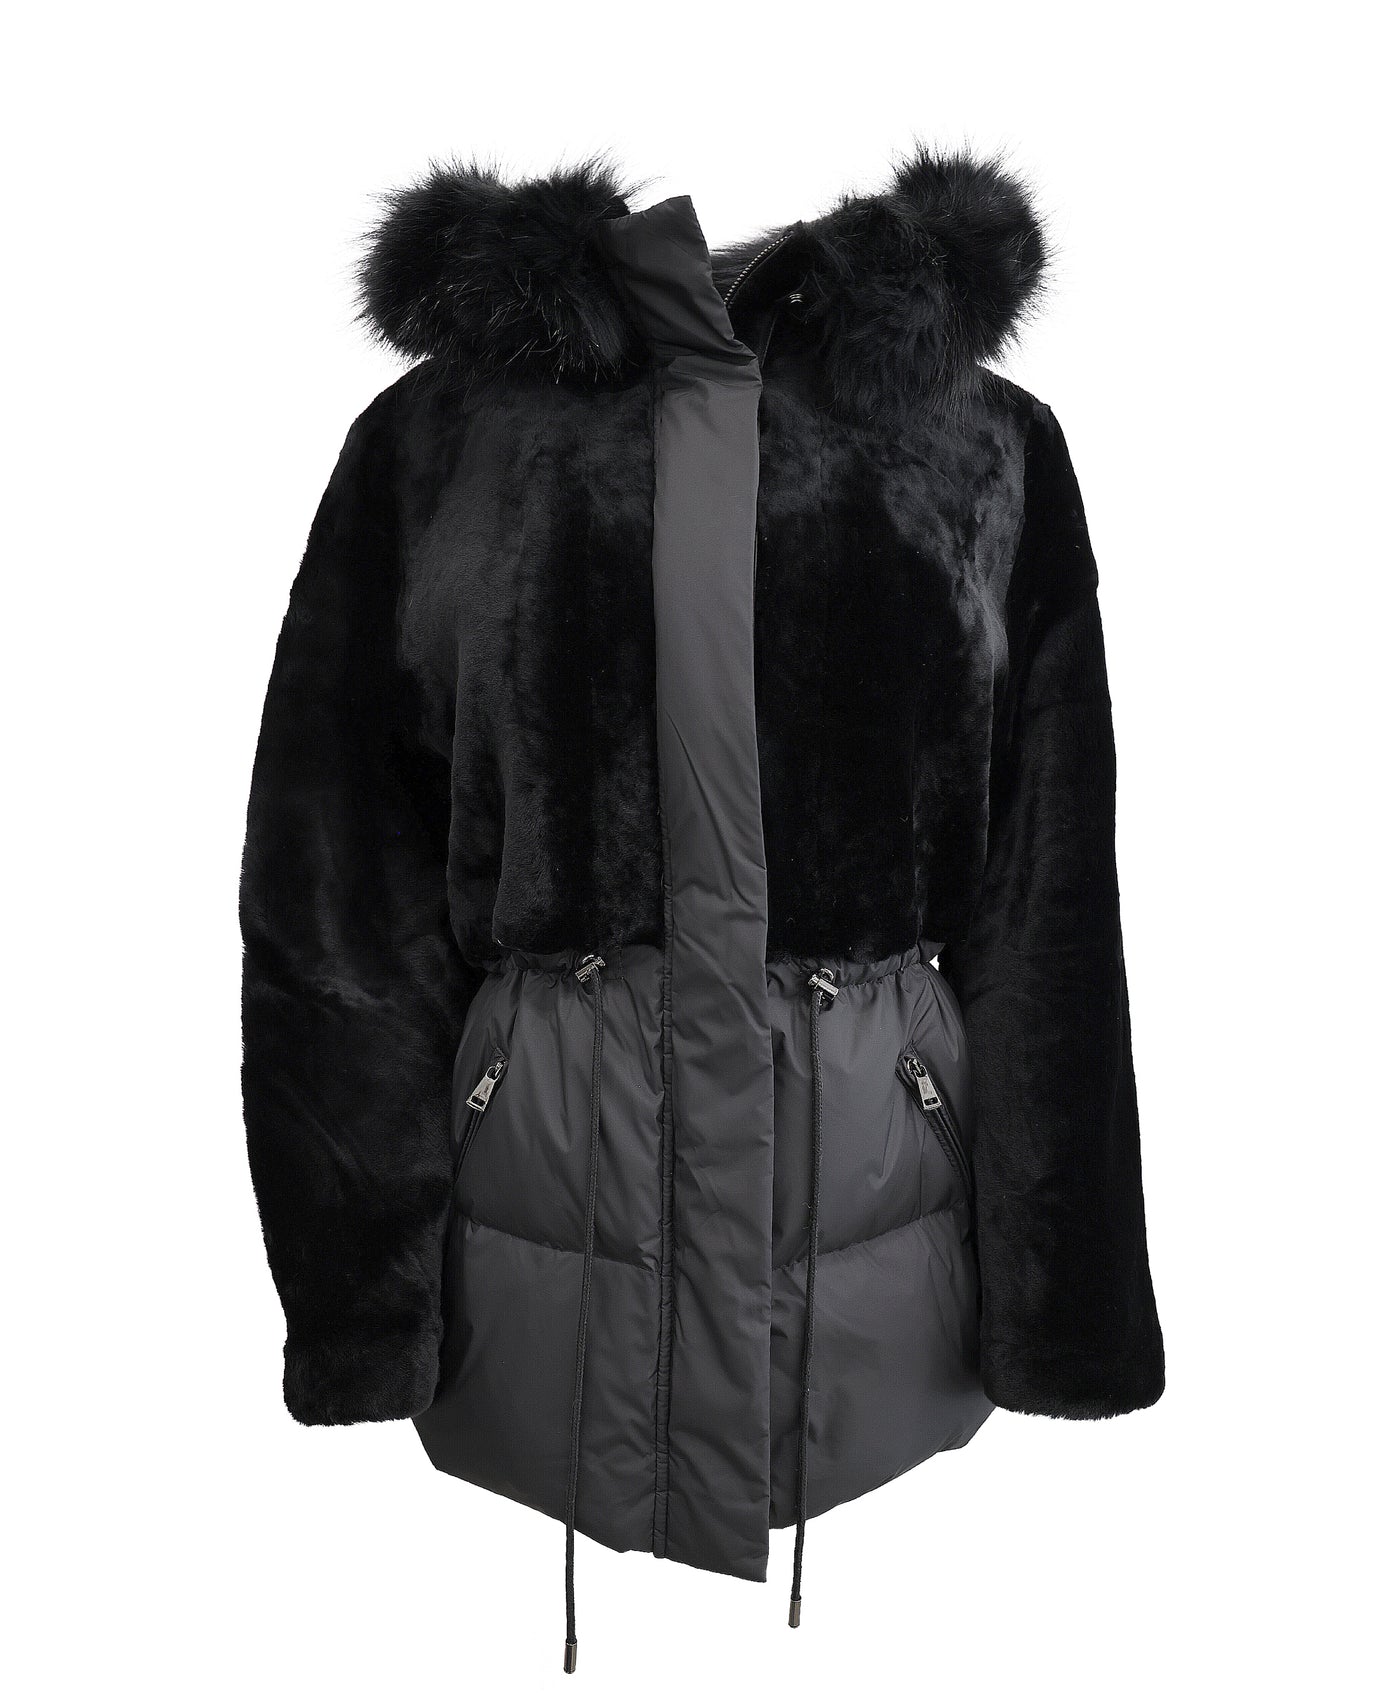 Shearling & Down Hooded Jacket w/ Fur Trim image 1